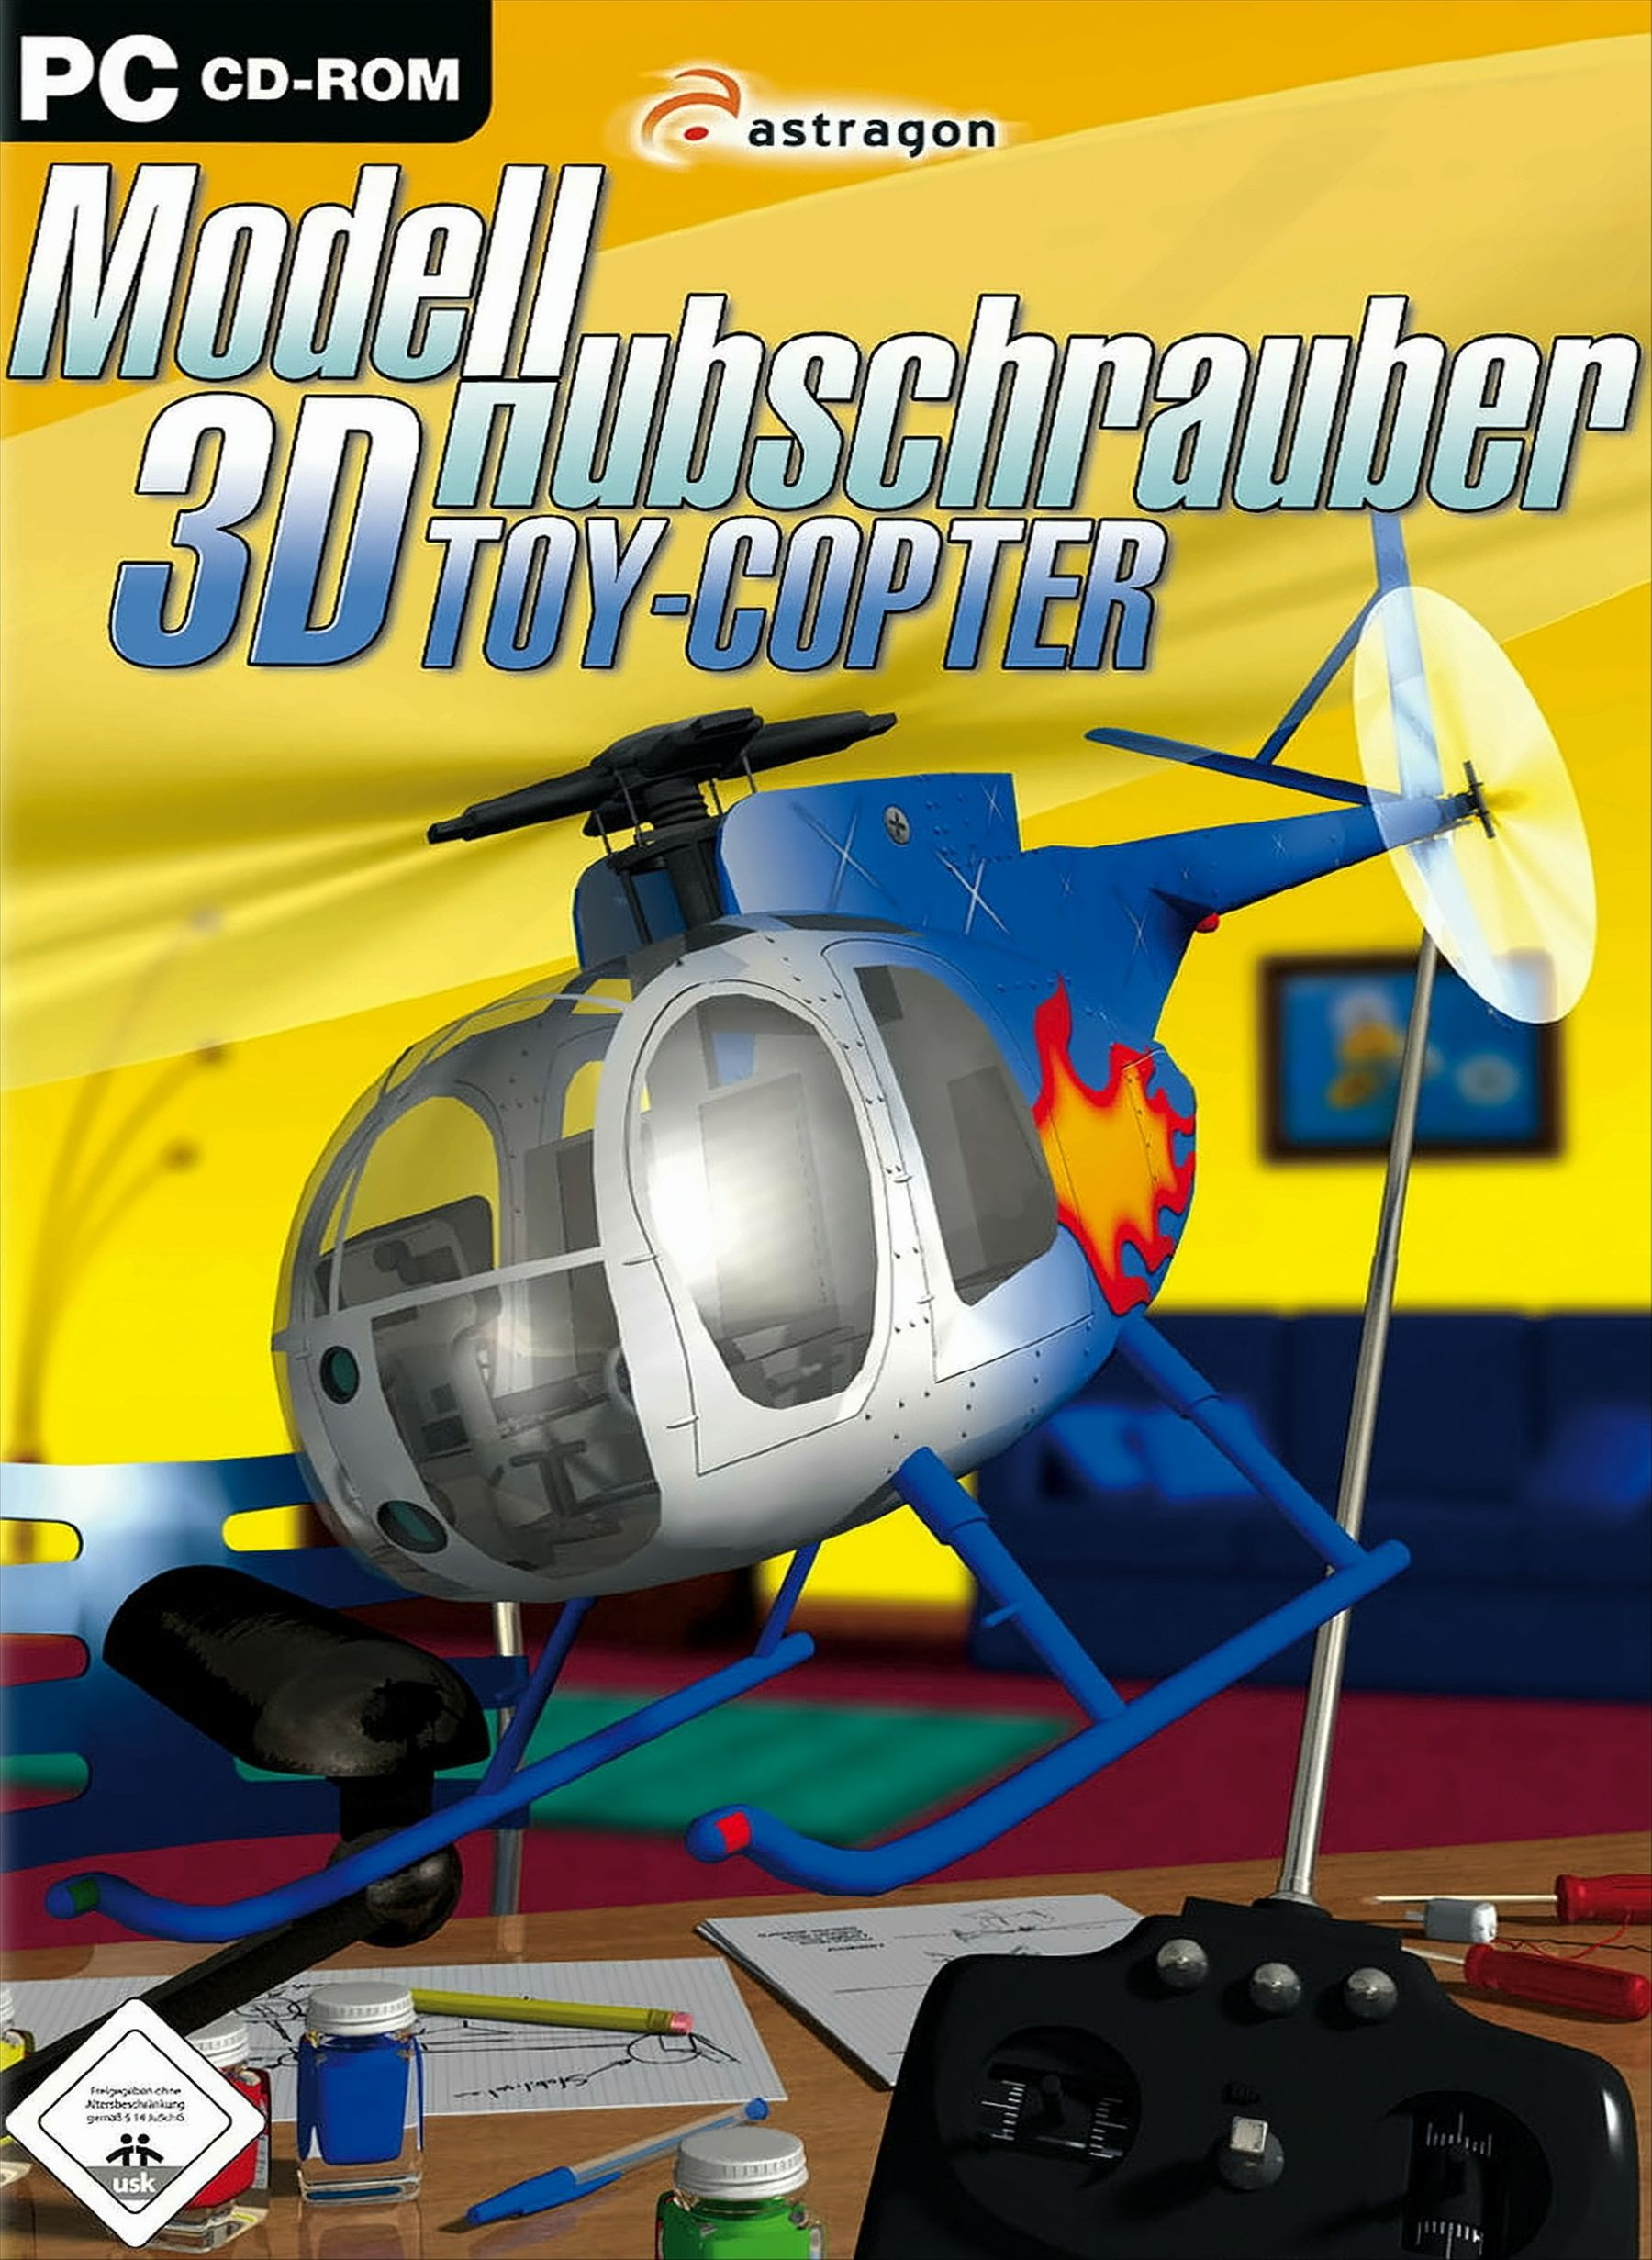 Modellhubschrauber 3D ToyCopter [PC] 